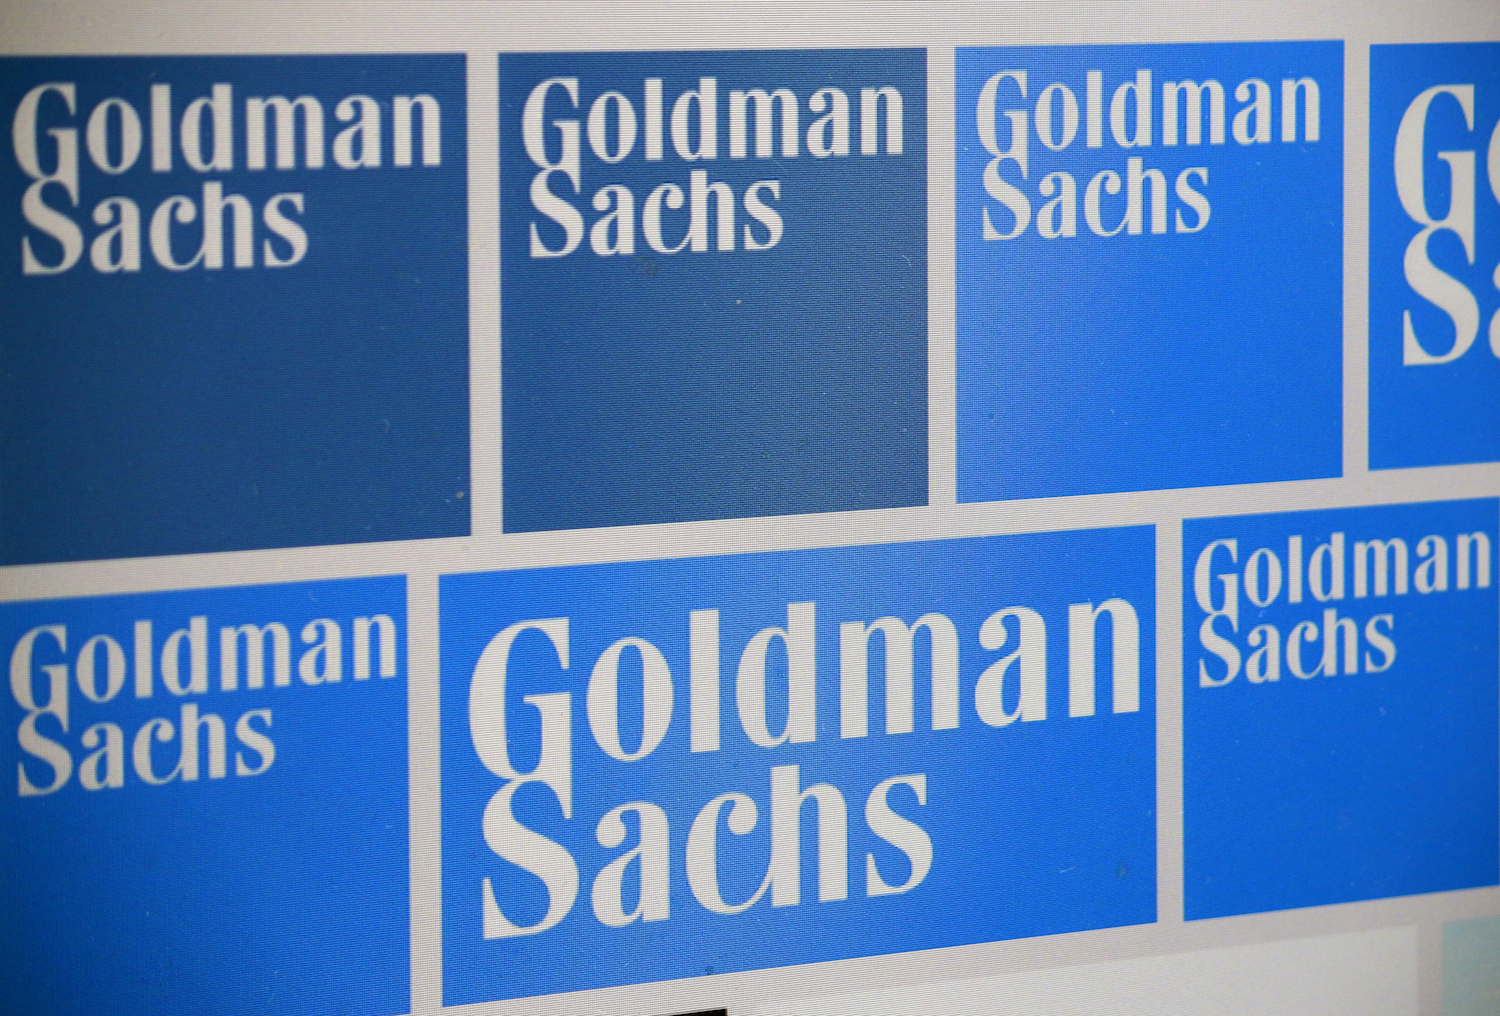 Goldman Sachs Seeks Executive To Lead ‘Unprecedented’ Digital Asset Projects